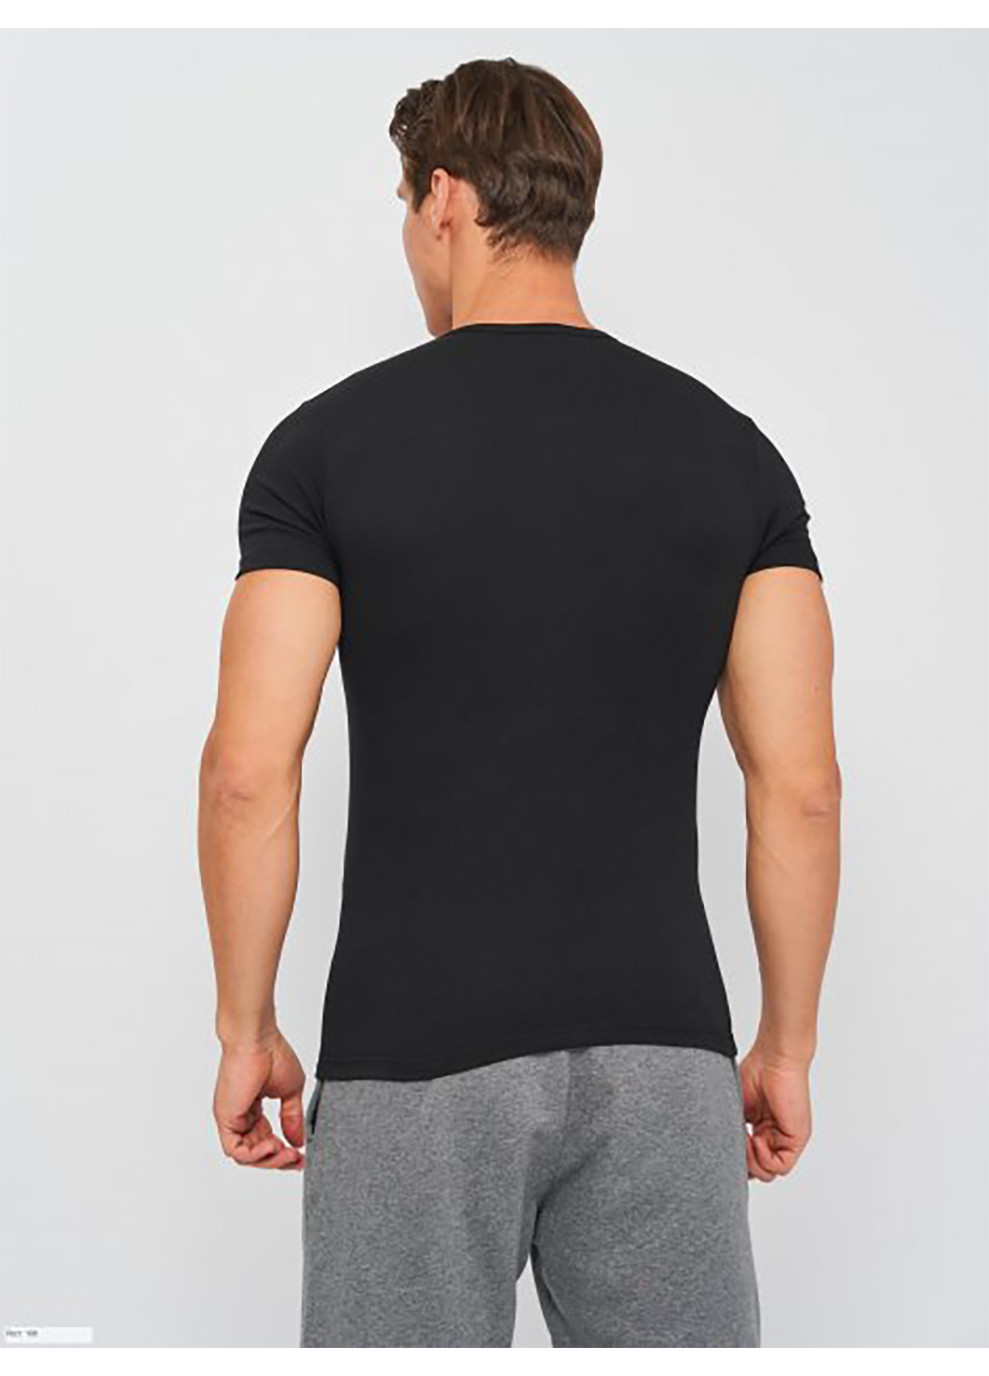 Черная футболка t-shirt mezza manica girocollo черный xl муж k1305 nero-xl Kappa